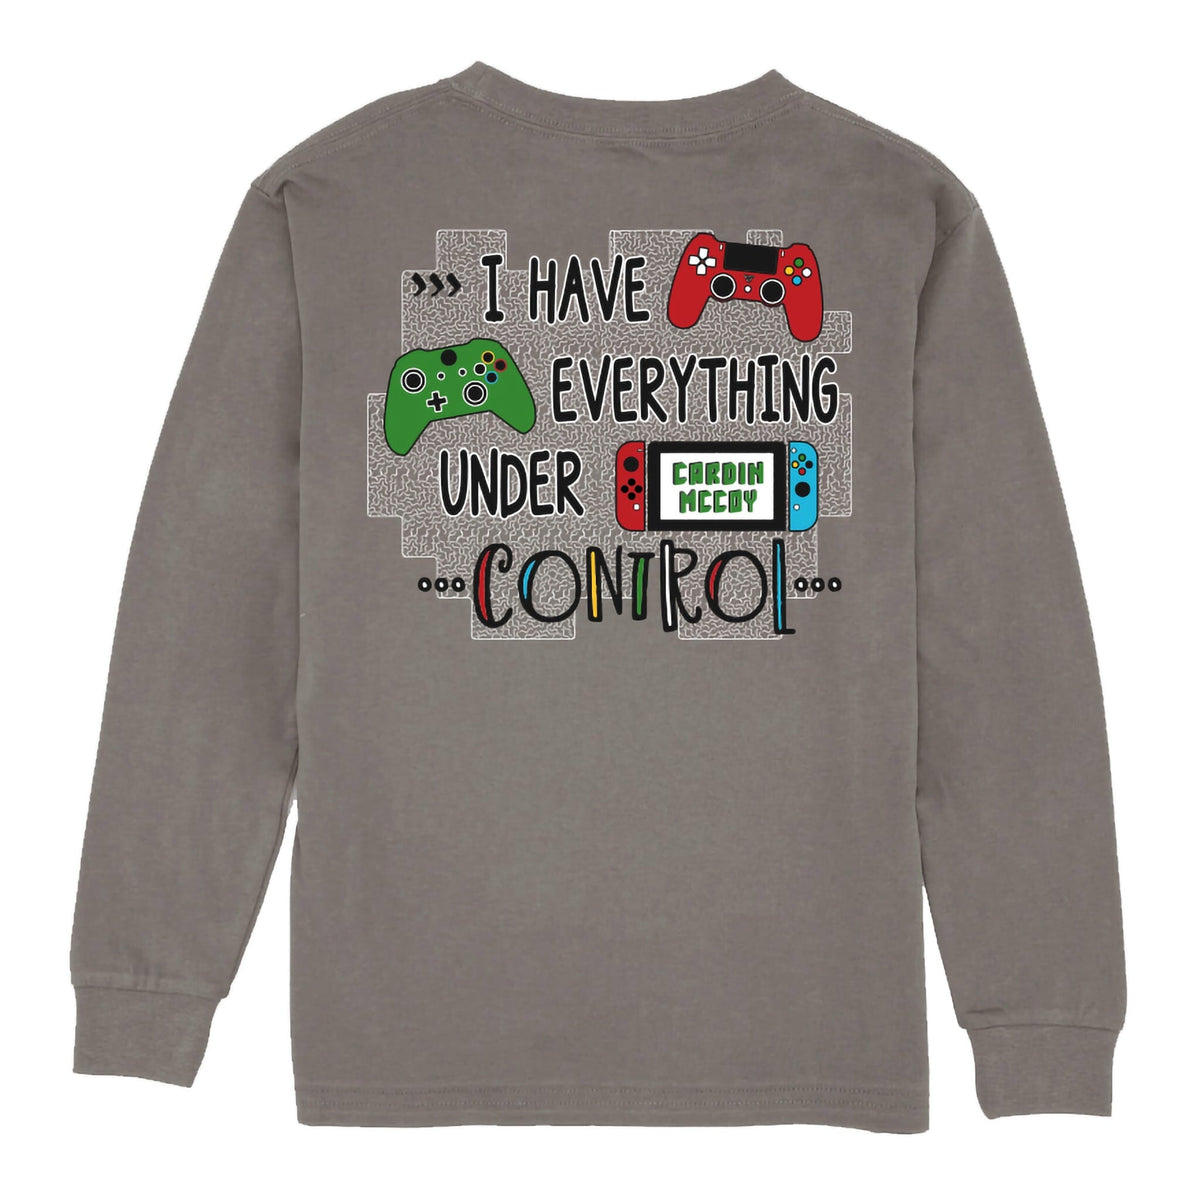 Kids' Under Control Long Sleeve Tee Long Sleeve T-Shirt Cardin McCoy Anchor Gray XXS (2/3) 